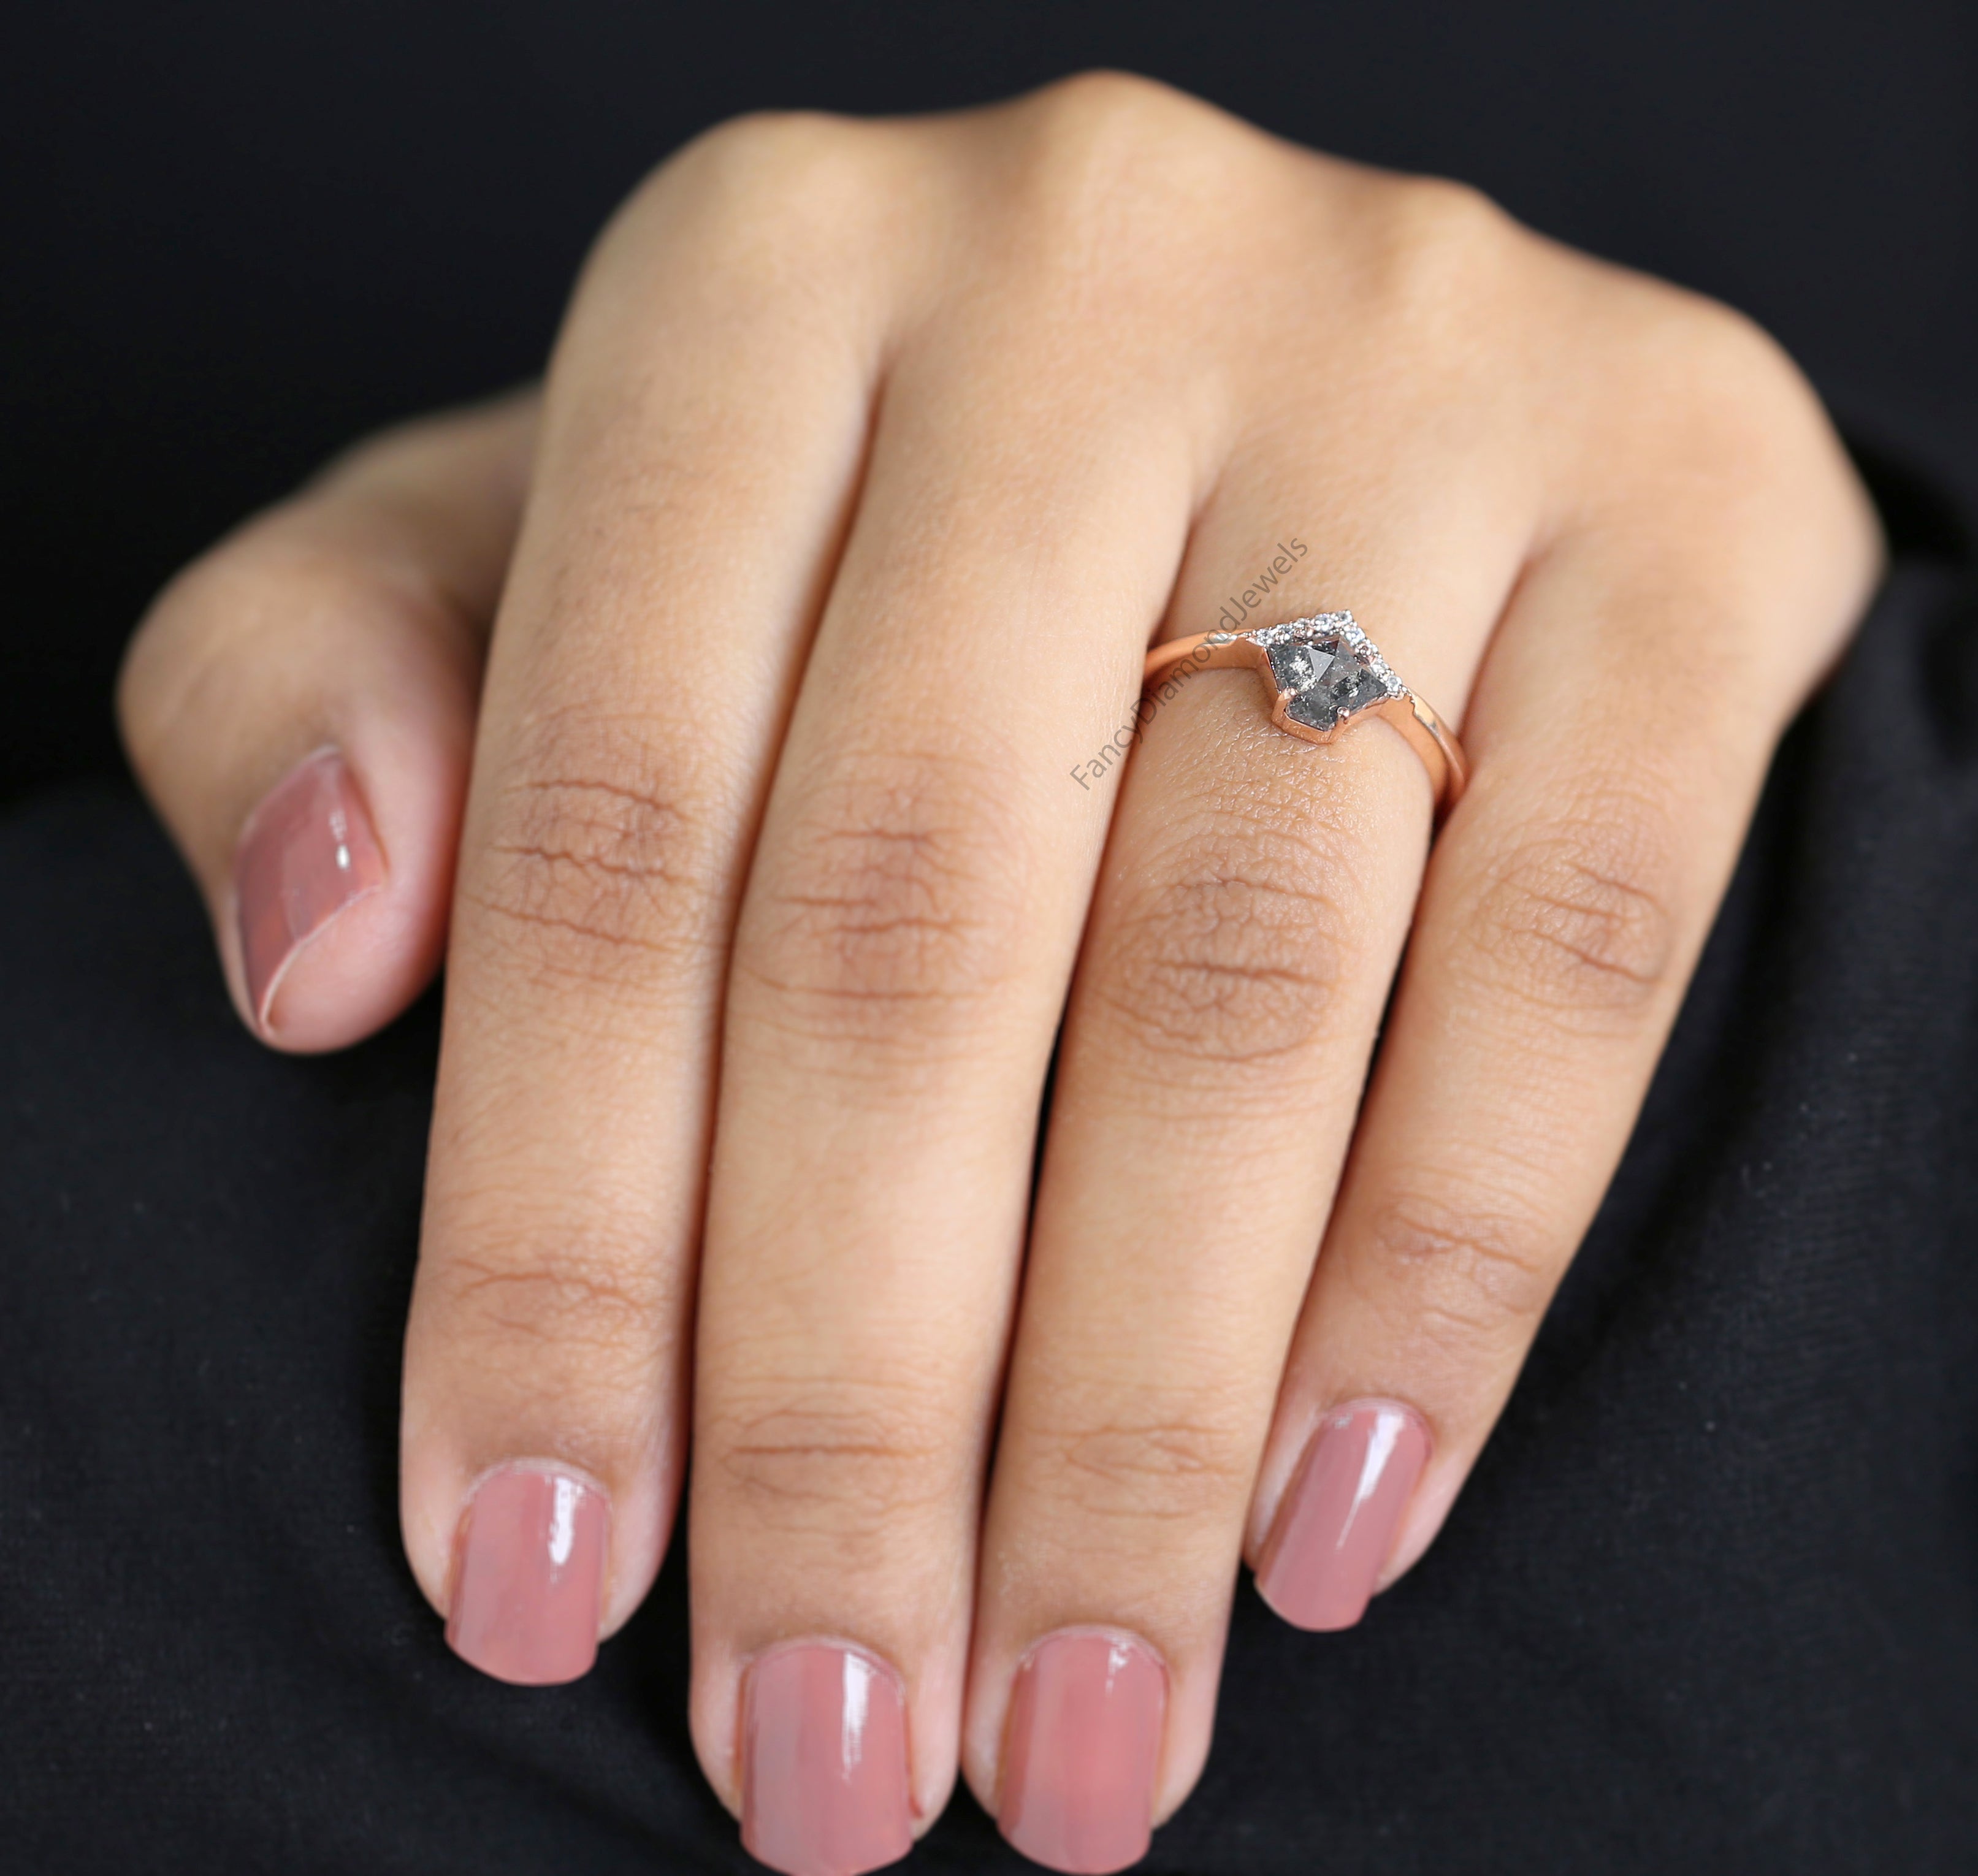 Pentagon Cut Salt And Pepper Diamond Ring 0.75 Ct 6.30 MM Pentagon Diamond Ring 14K Rose Gold Silver Engagement Ring Gift For Her QL9971